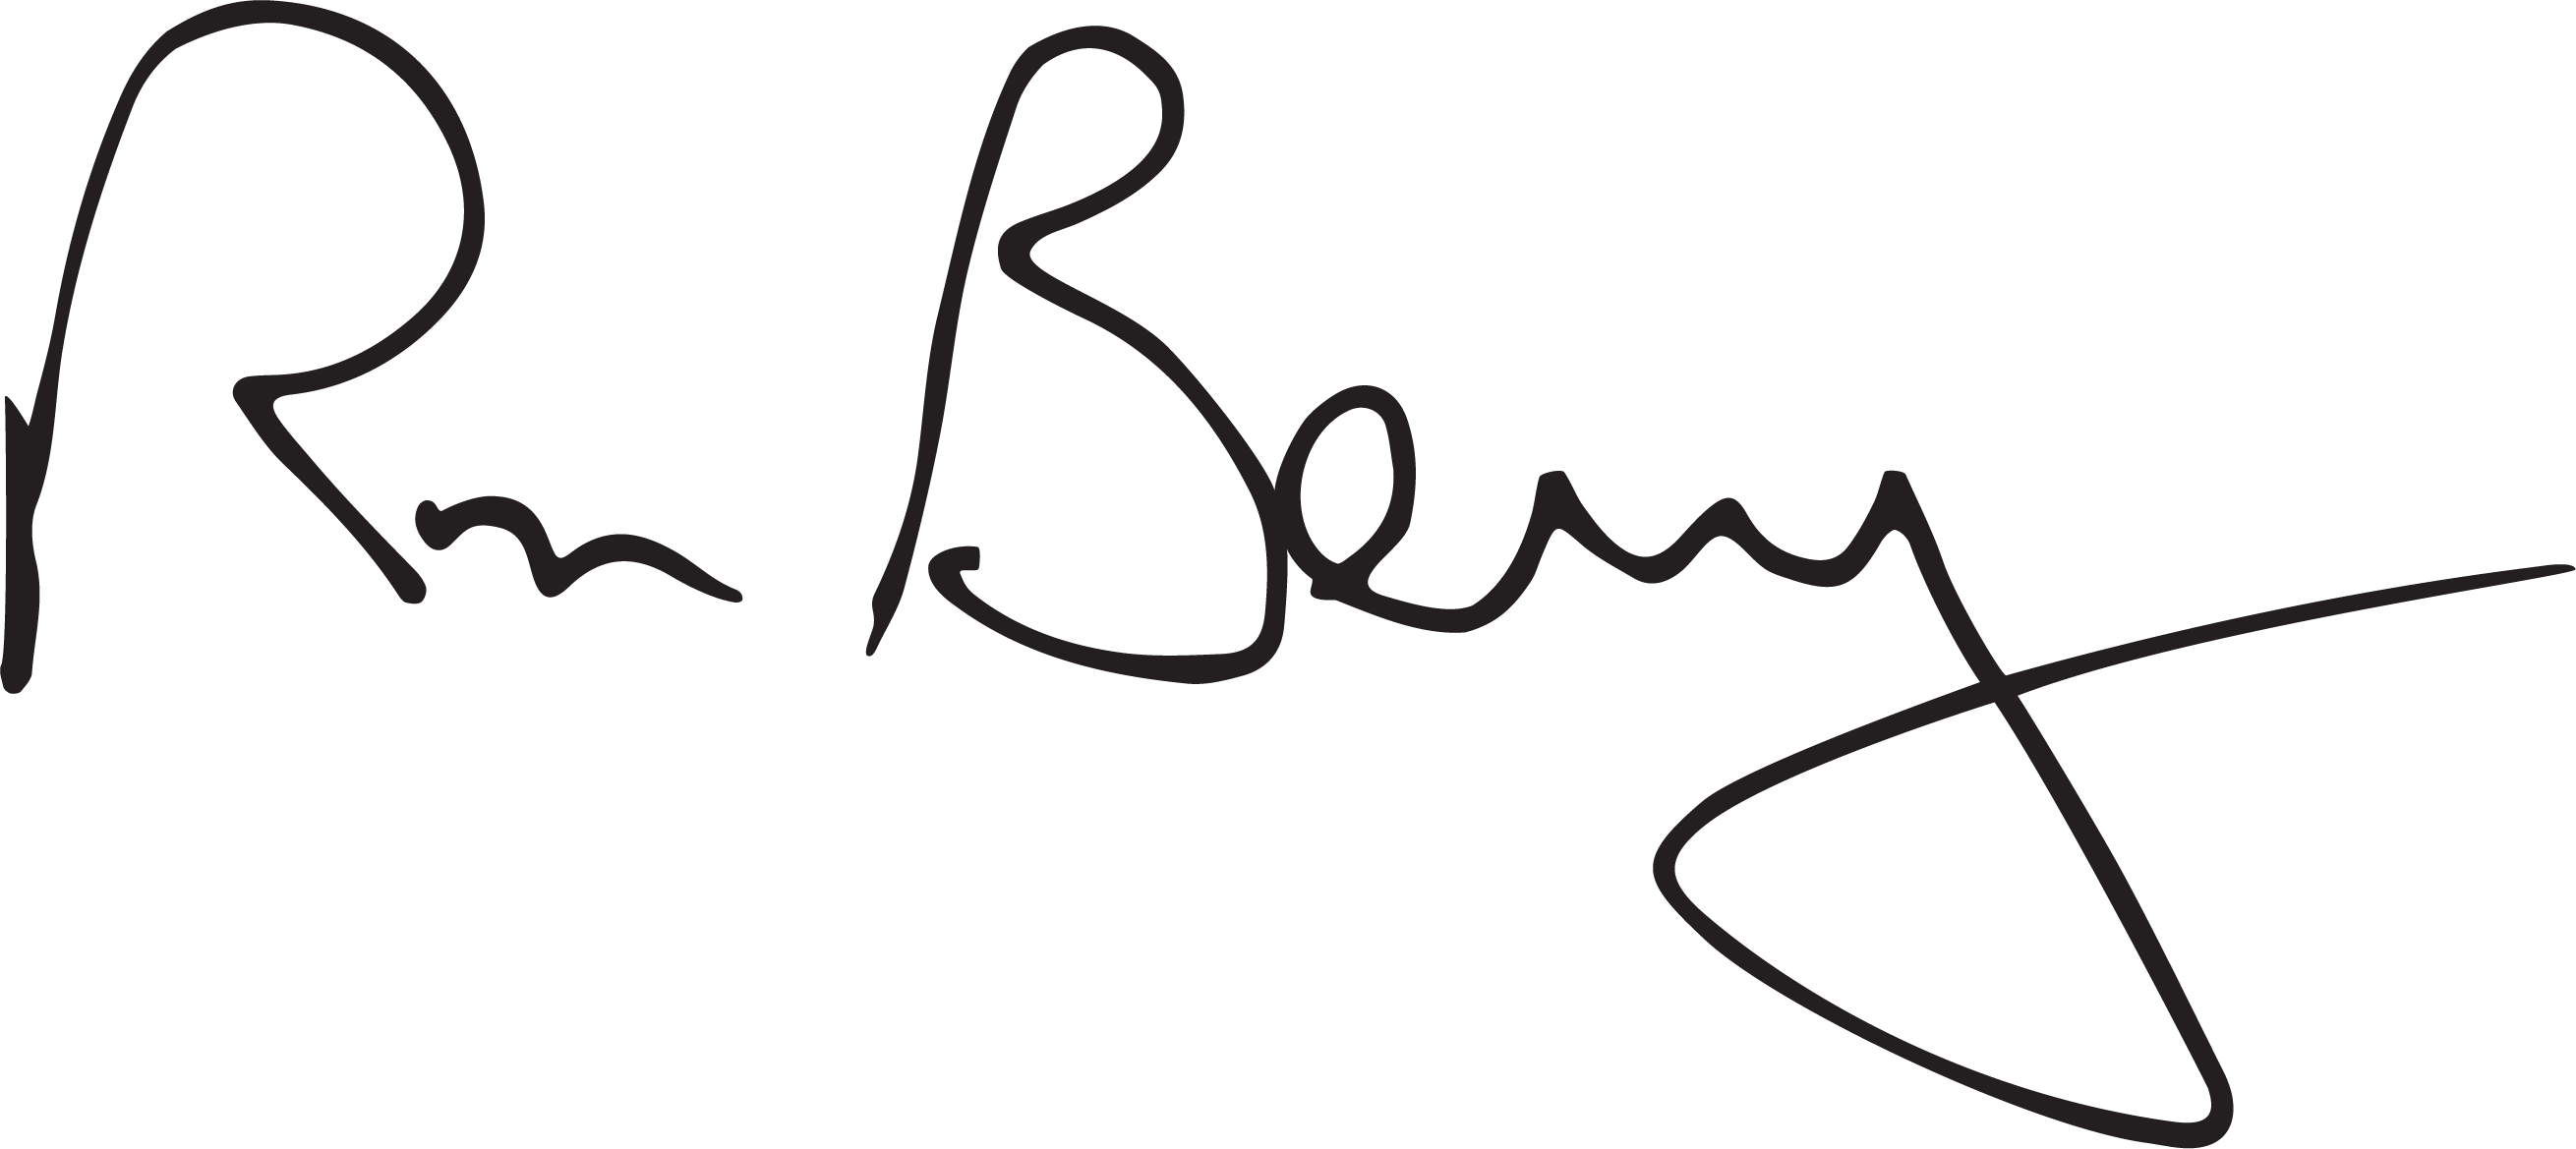 president_ronald_berry_signature